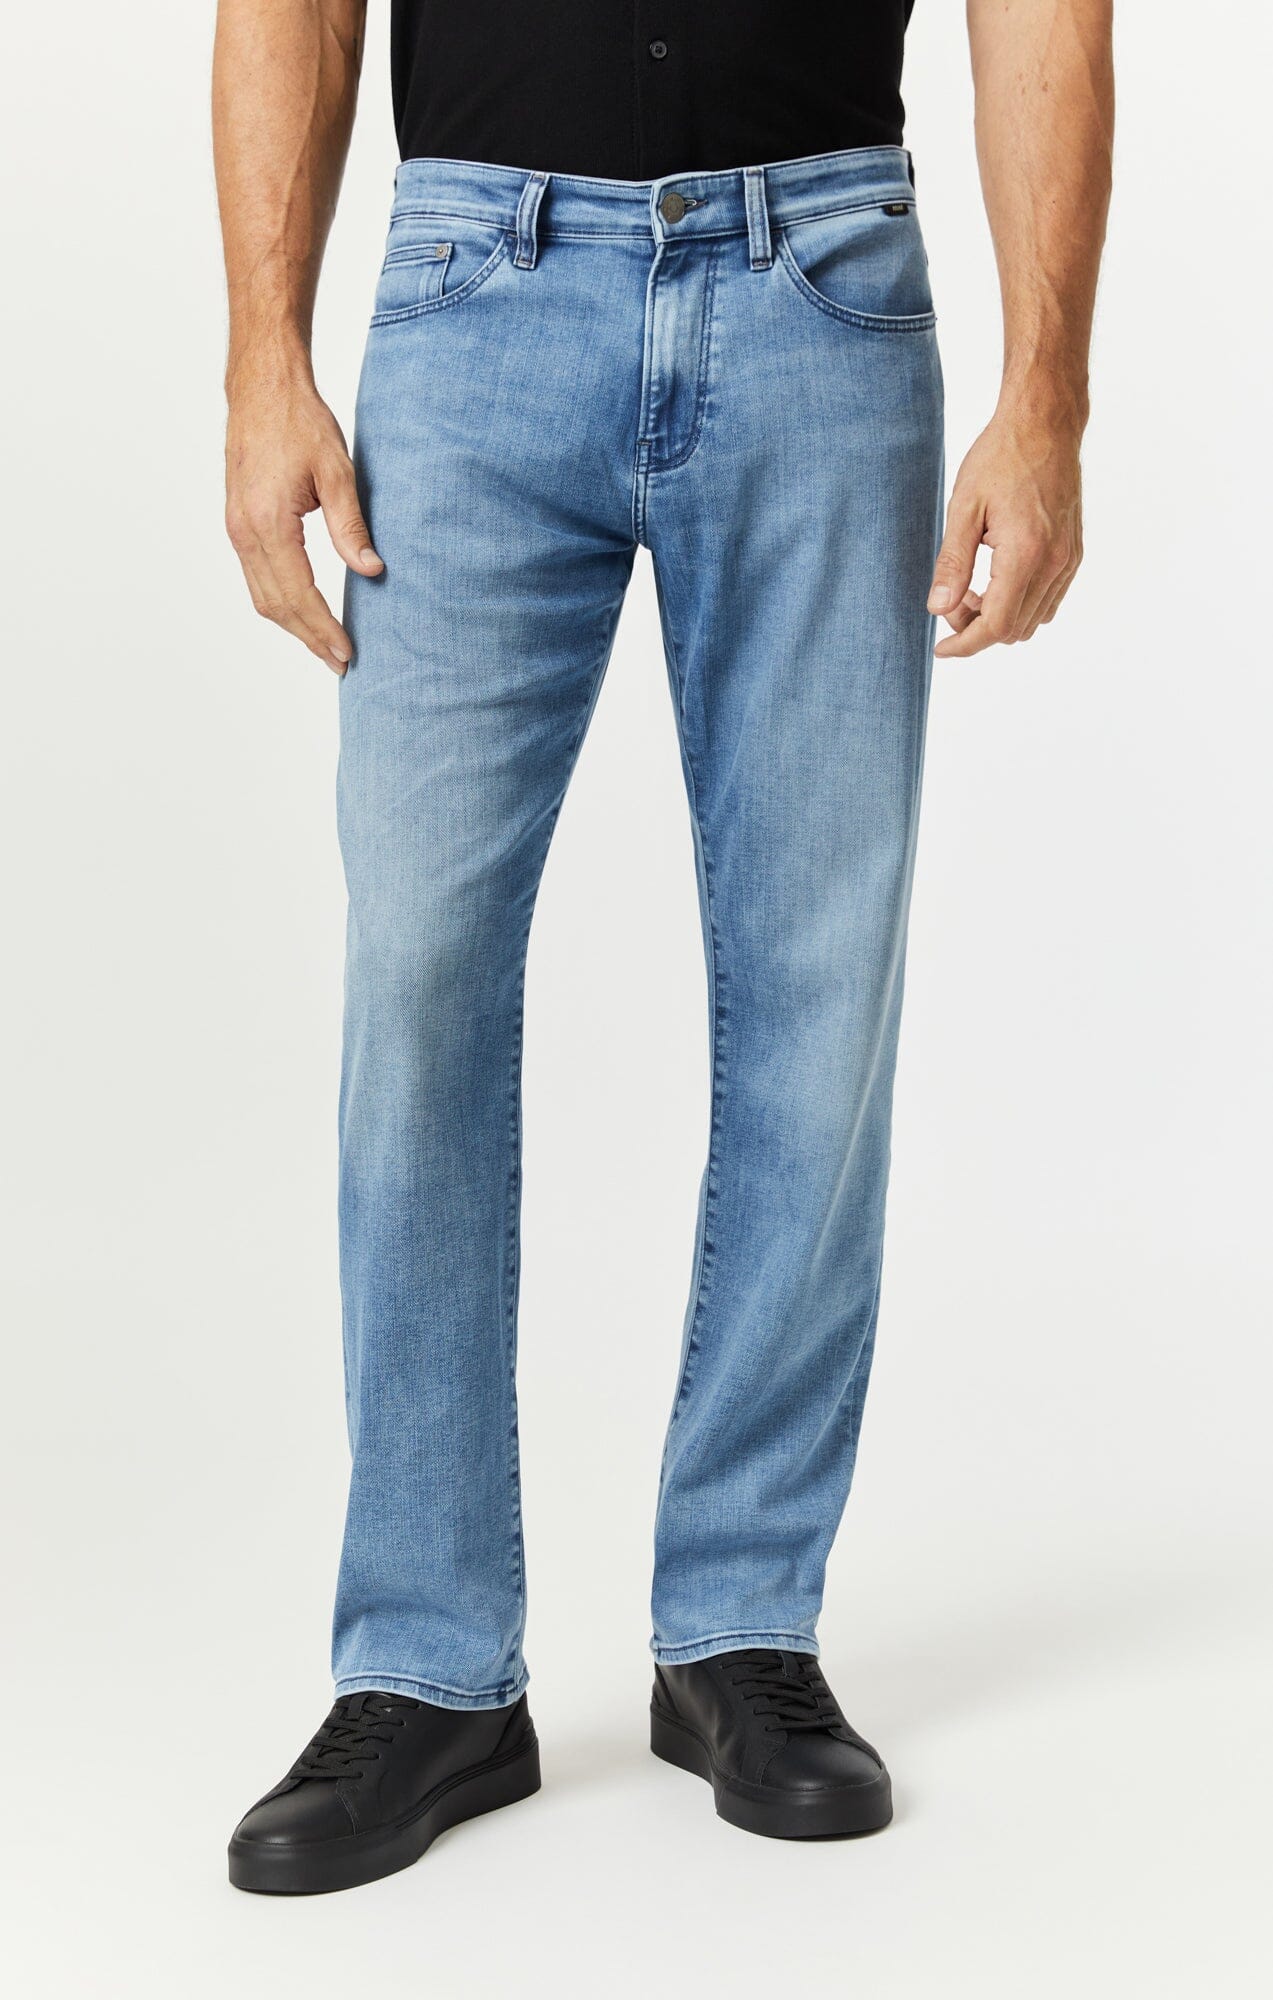 Preços baixos em Jeans masculino Mavi Jeans